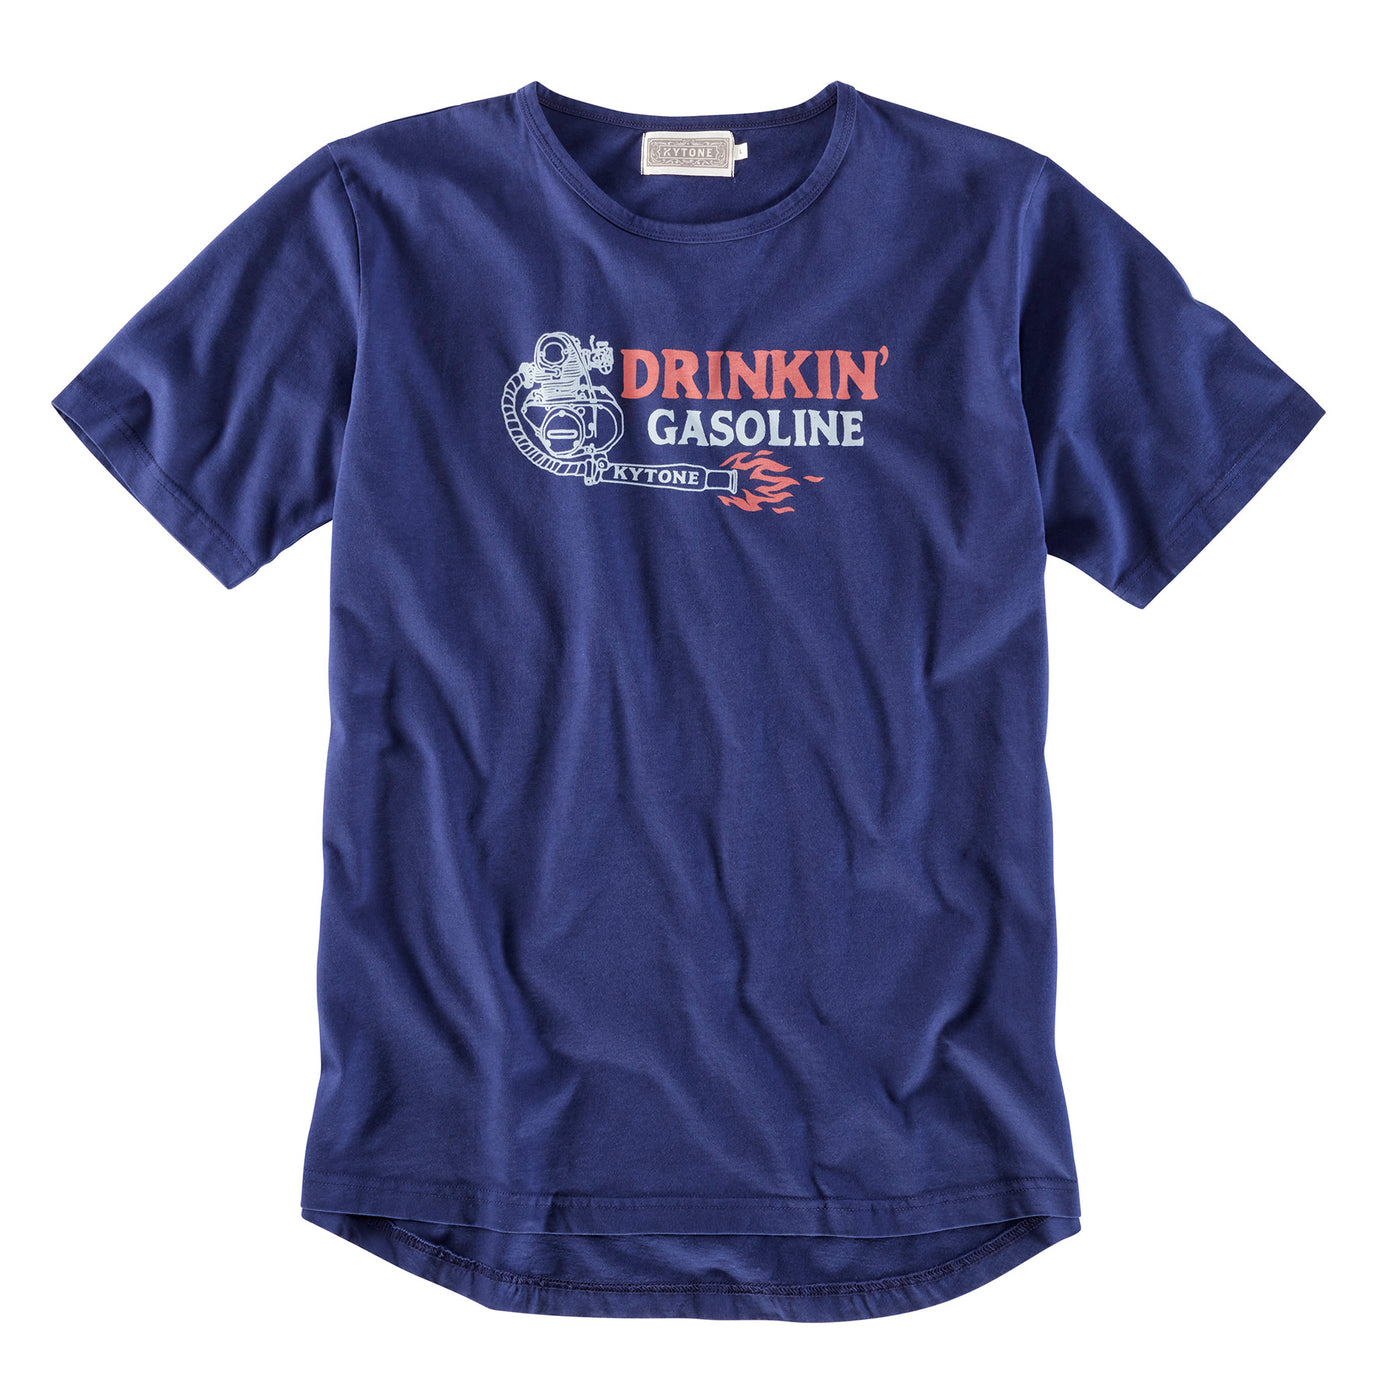 Kytone T-Shirt Gasoline